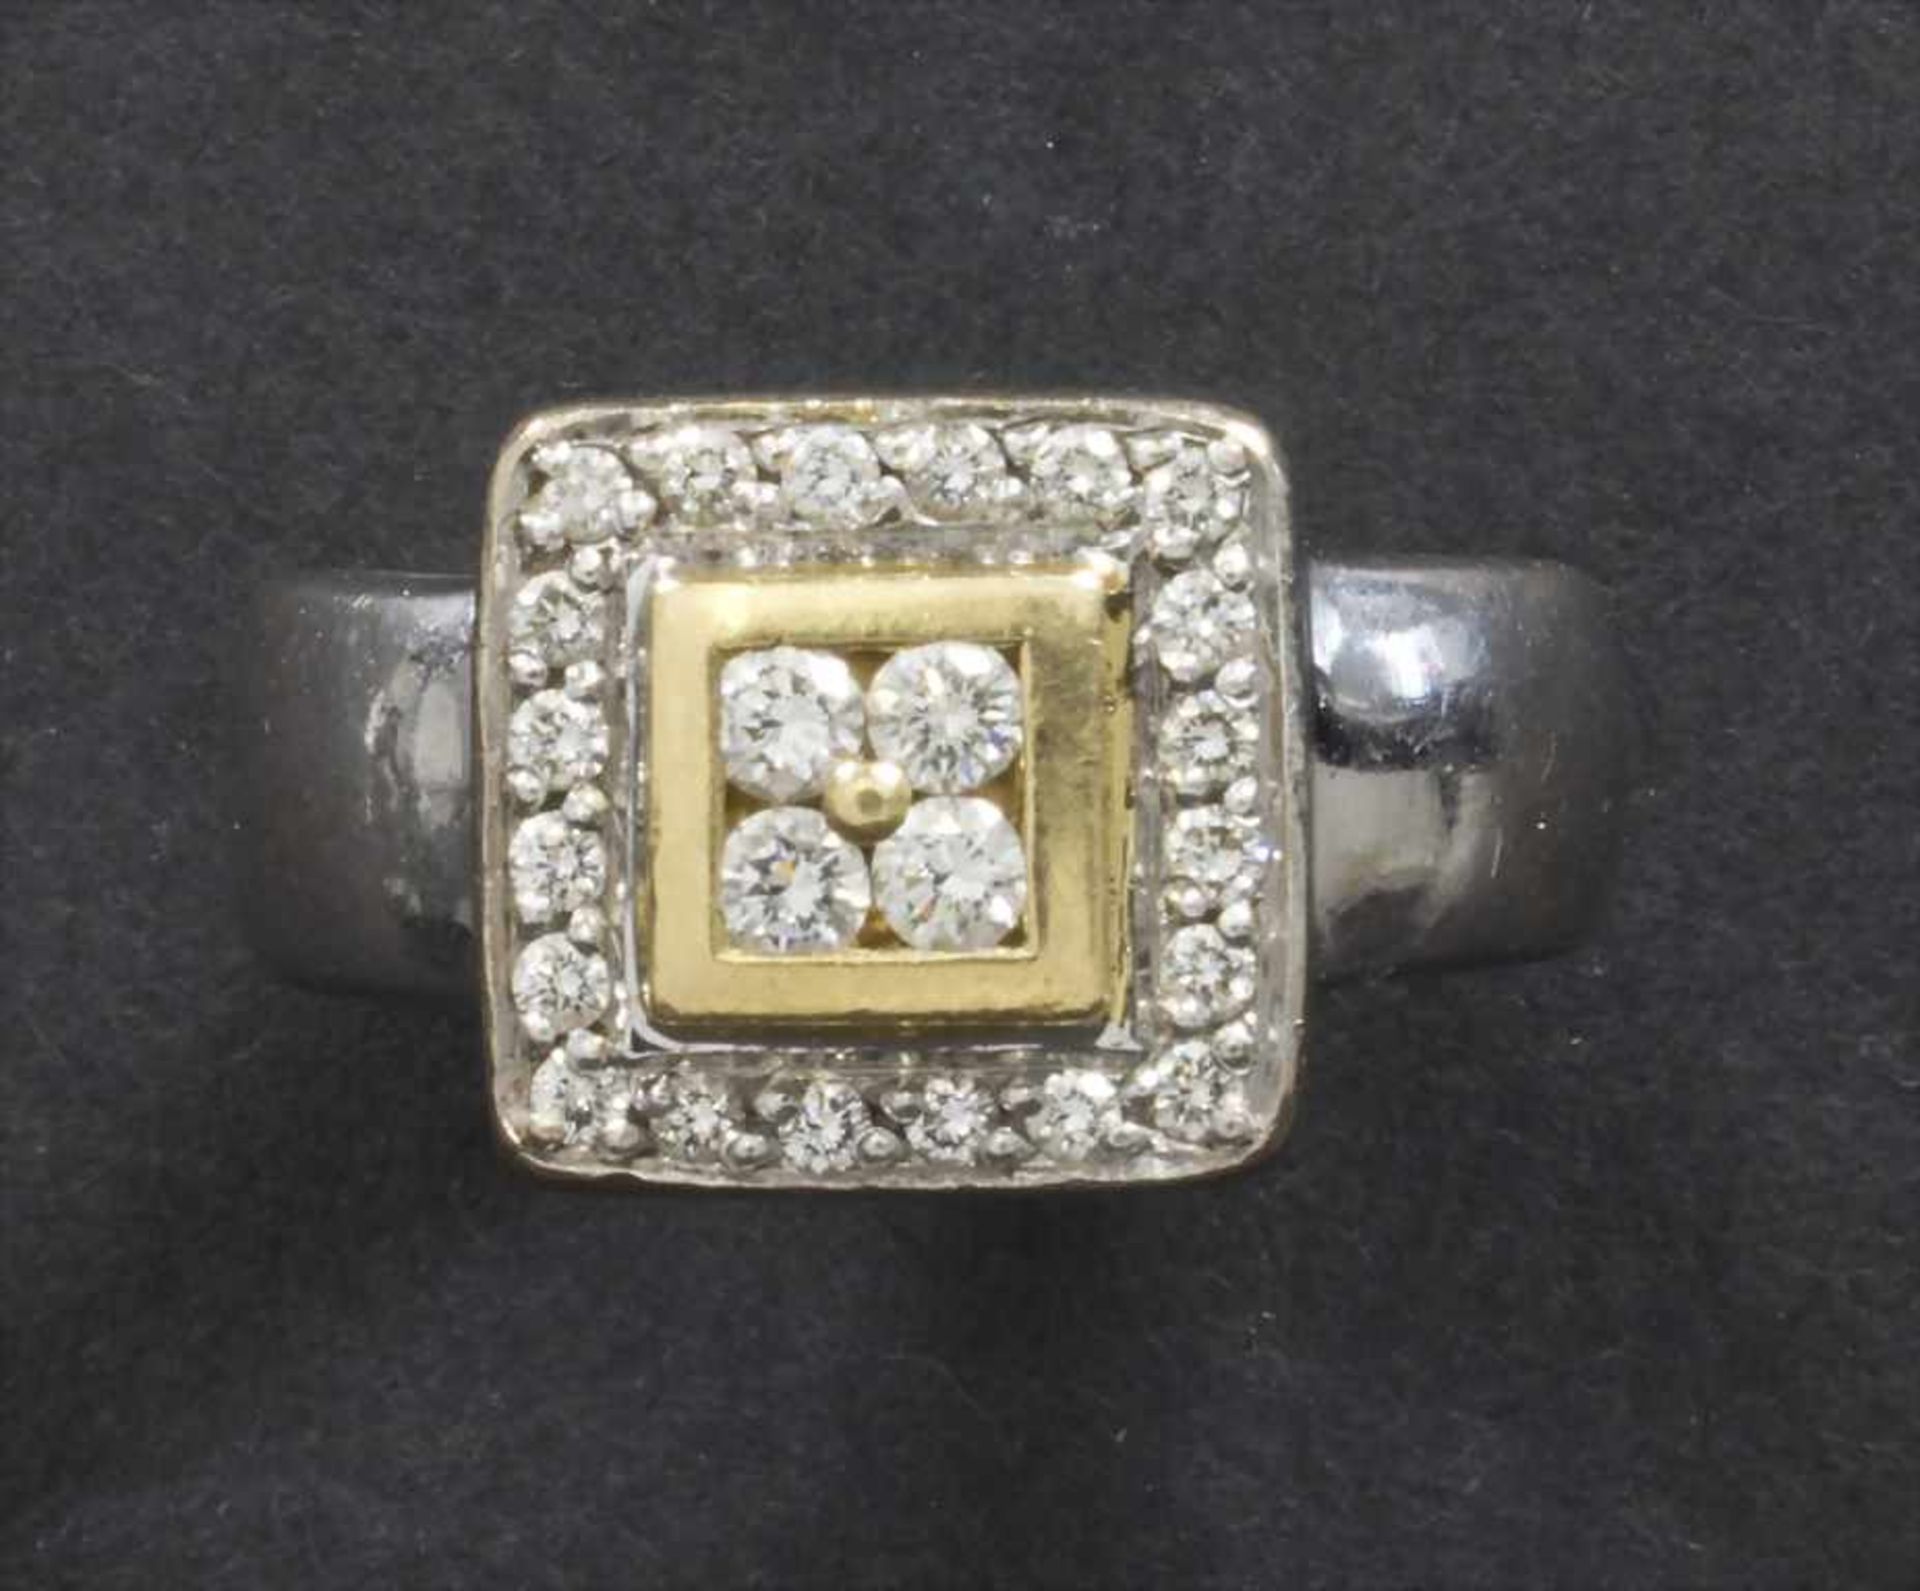 Damenring mit Diamanten / A ladies ring with diamondsMaterial: WG/GG 750/000 ,RG: 57,Gewicht: 11,8